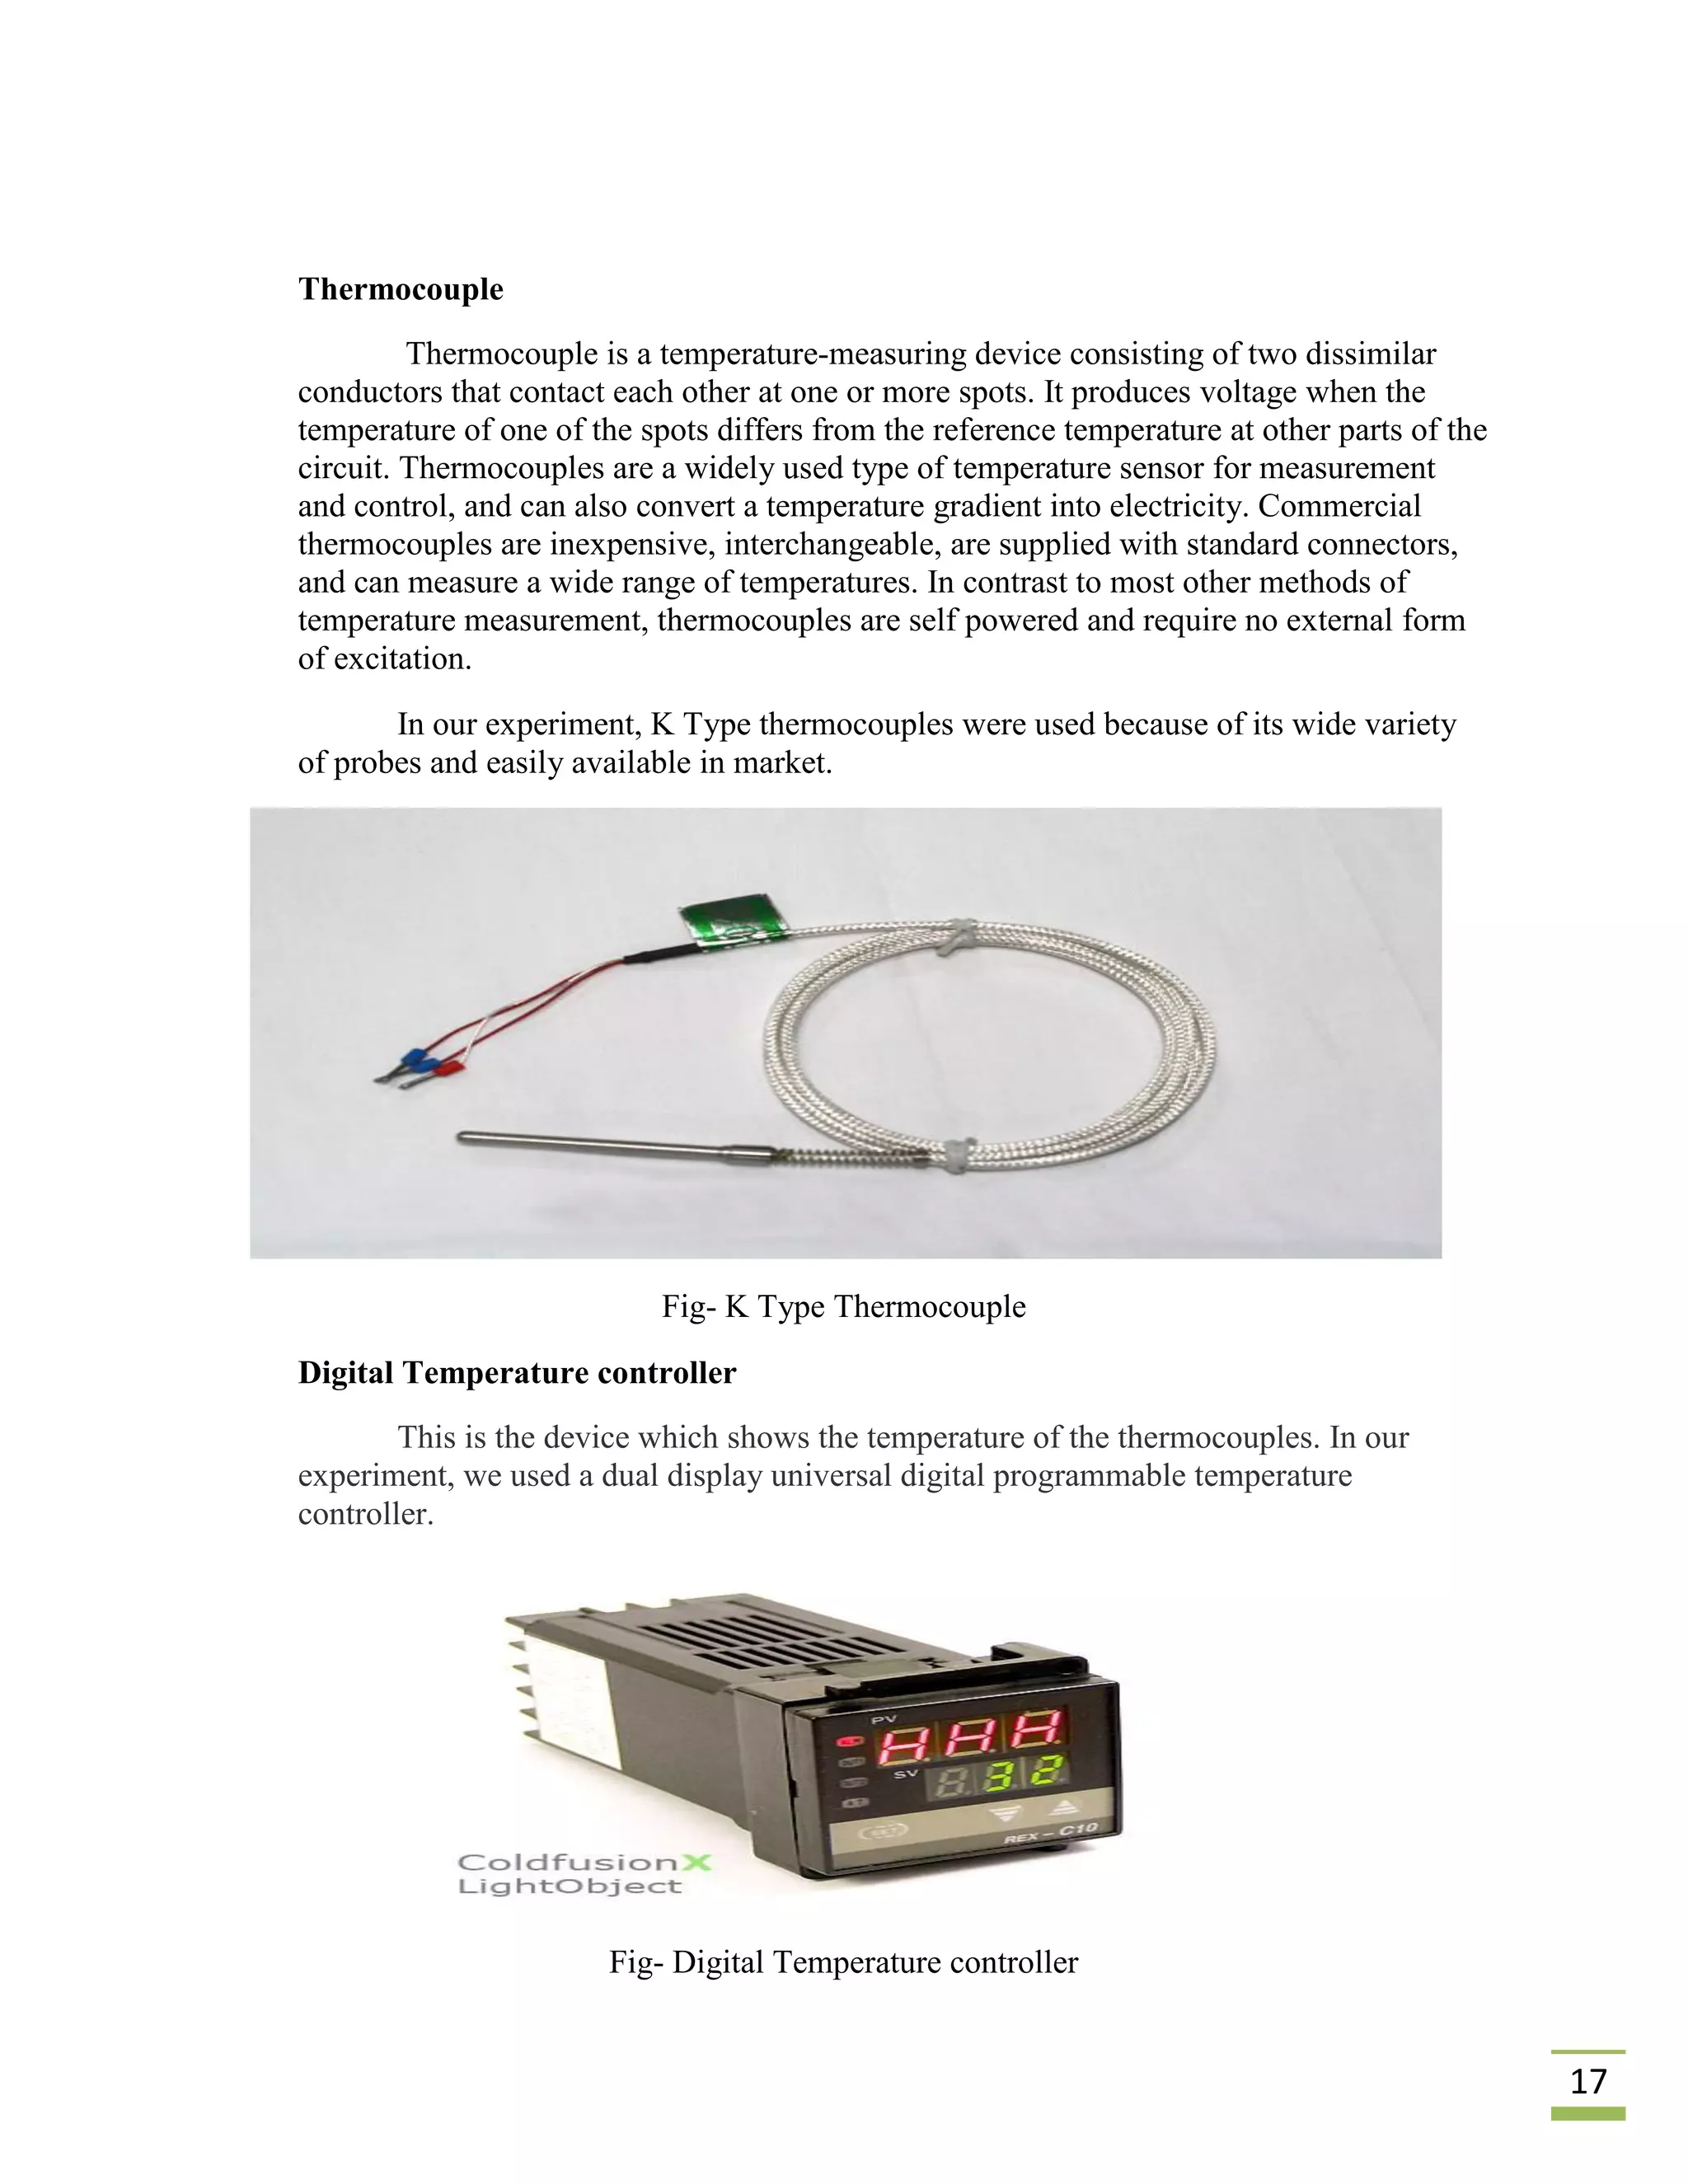 heat conduction apparatus lab report